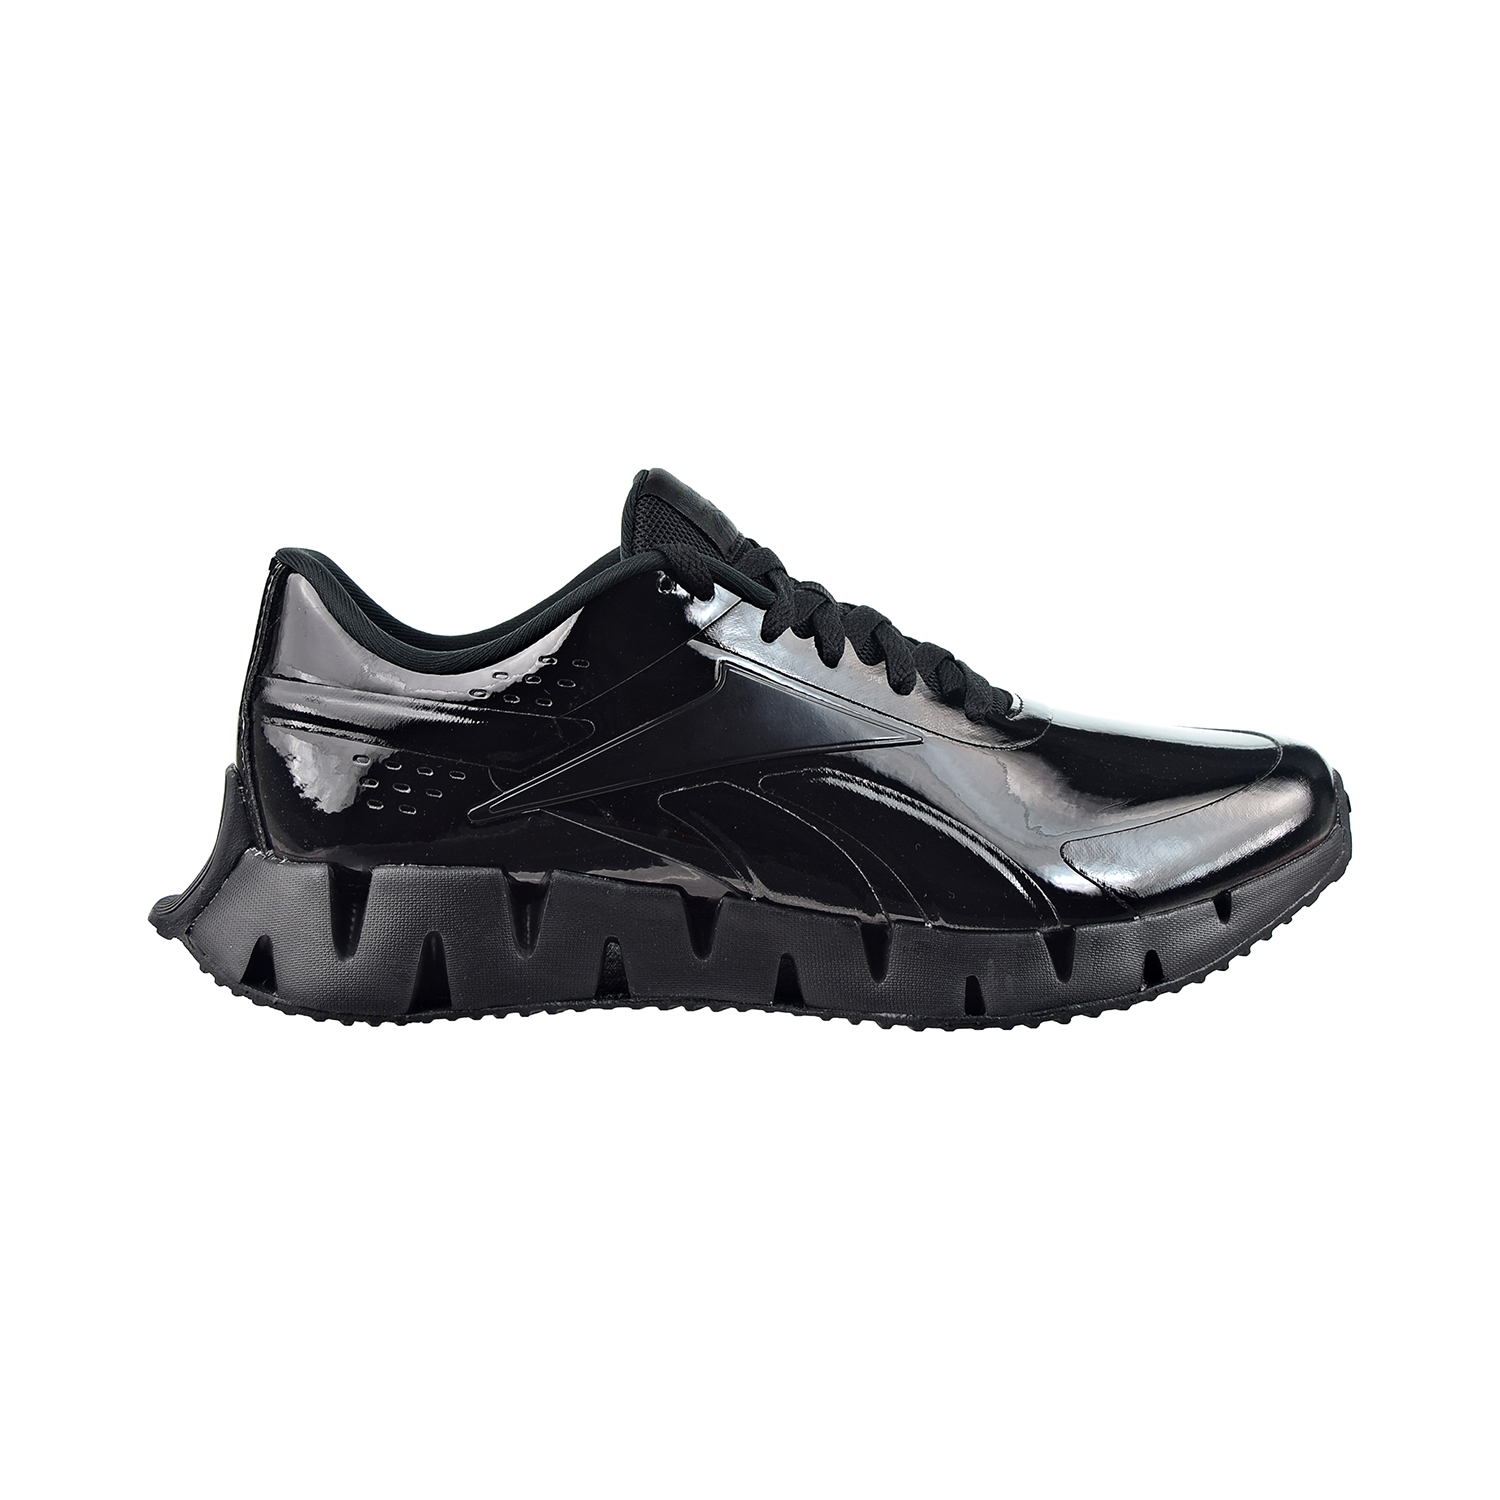 Reebok Zig Dynamica 2 Men's Shoes Black gx7542